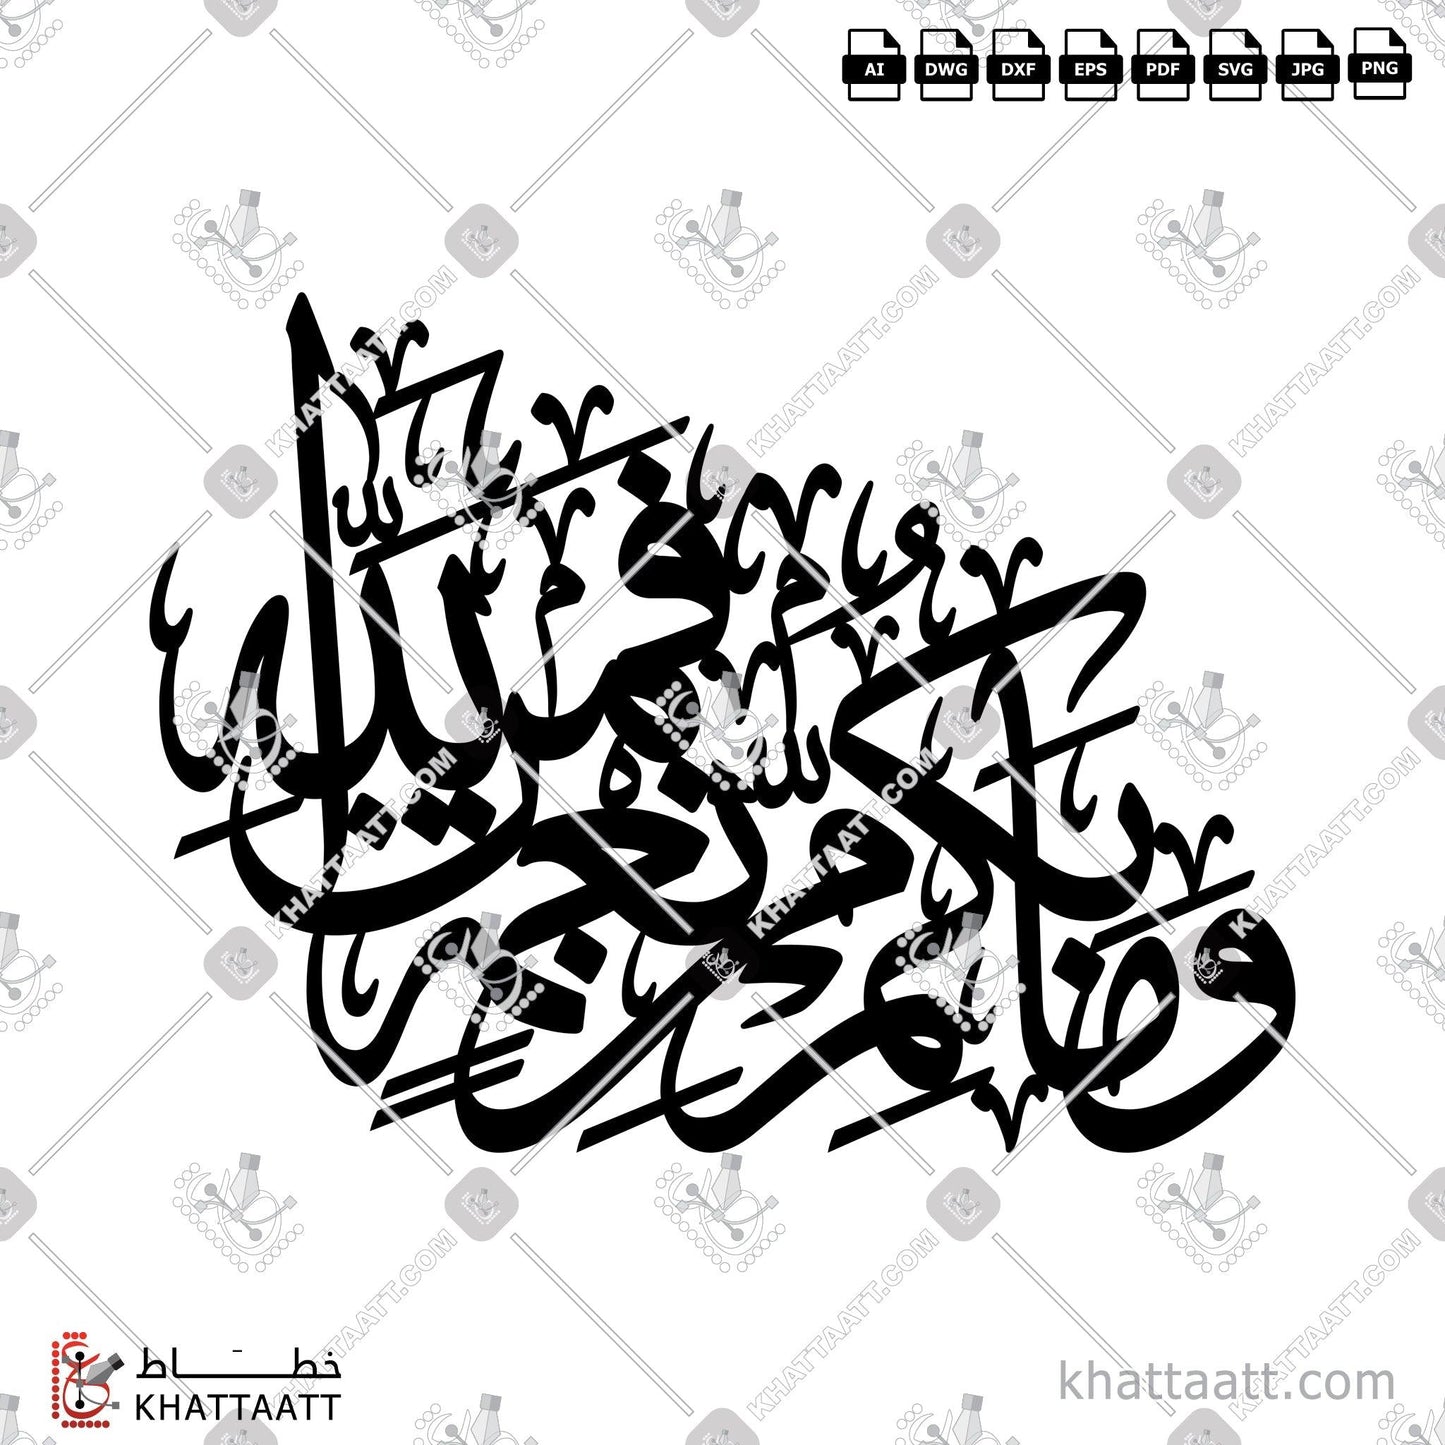 Download Arabic Calligraphy of وما بكم من نعمة فمن الله in Thuluth - خط الثلث in vector and .png